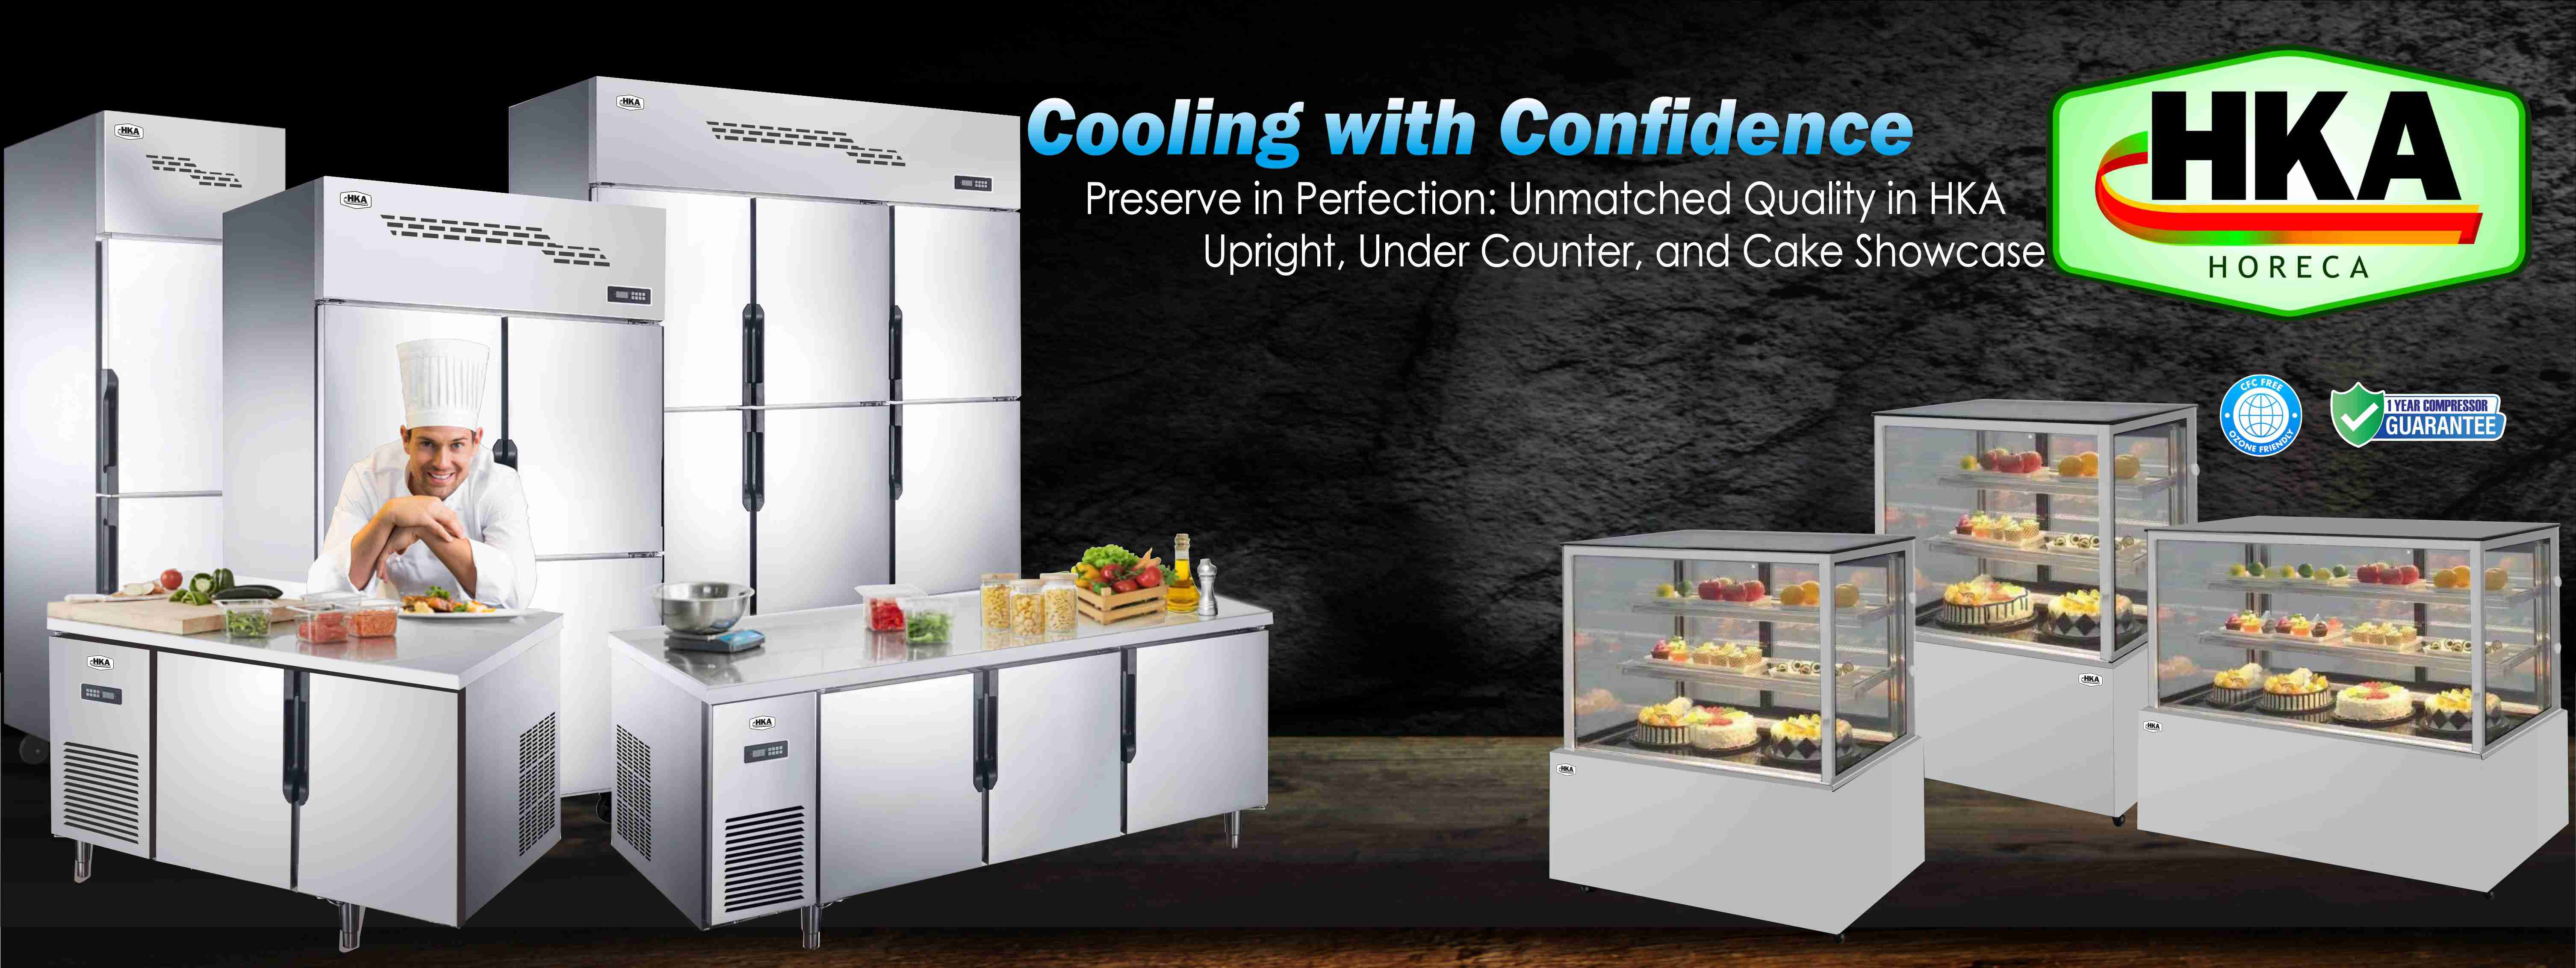 https://kitchenequipmenthka.co.id/produk/261/Under-Counter-Freezer-2-Door-HKA